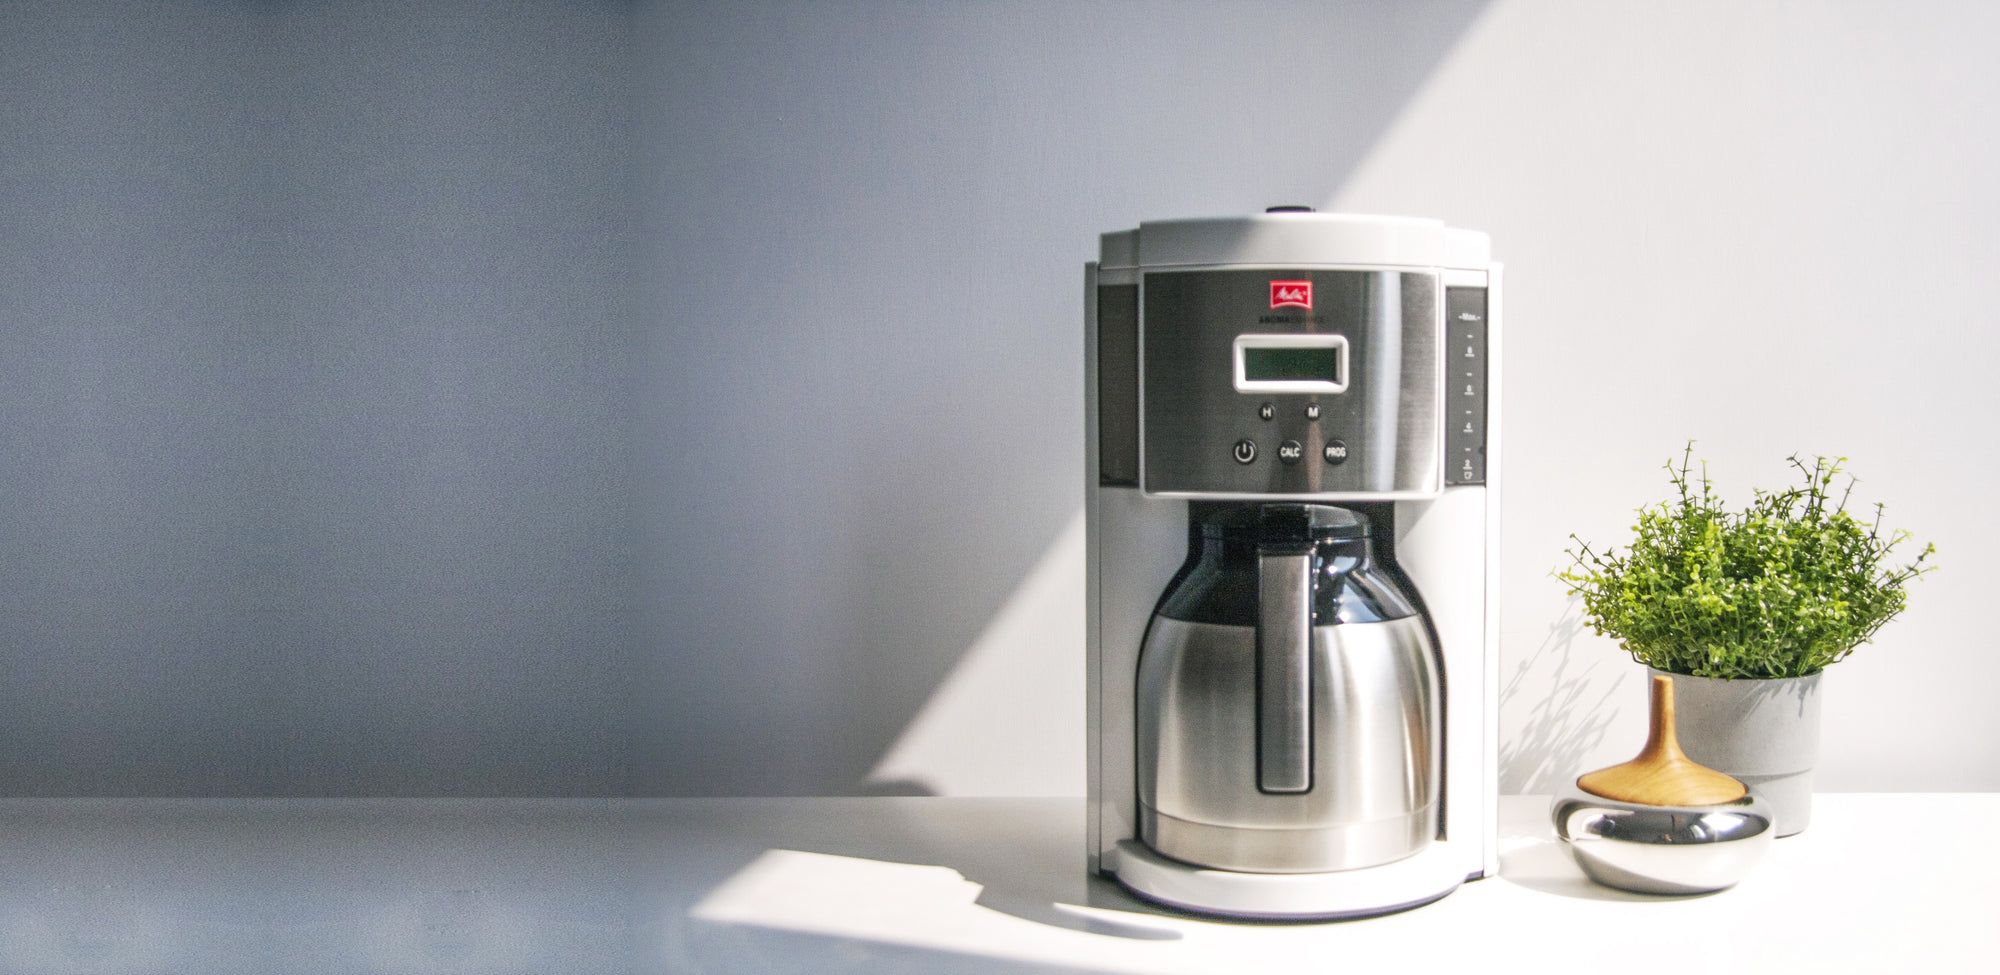 Wabilogic Melitta Aroma Enhance coffee maker wfh coffee home coffee corner